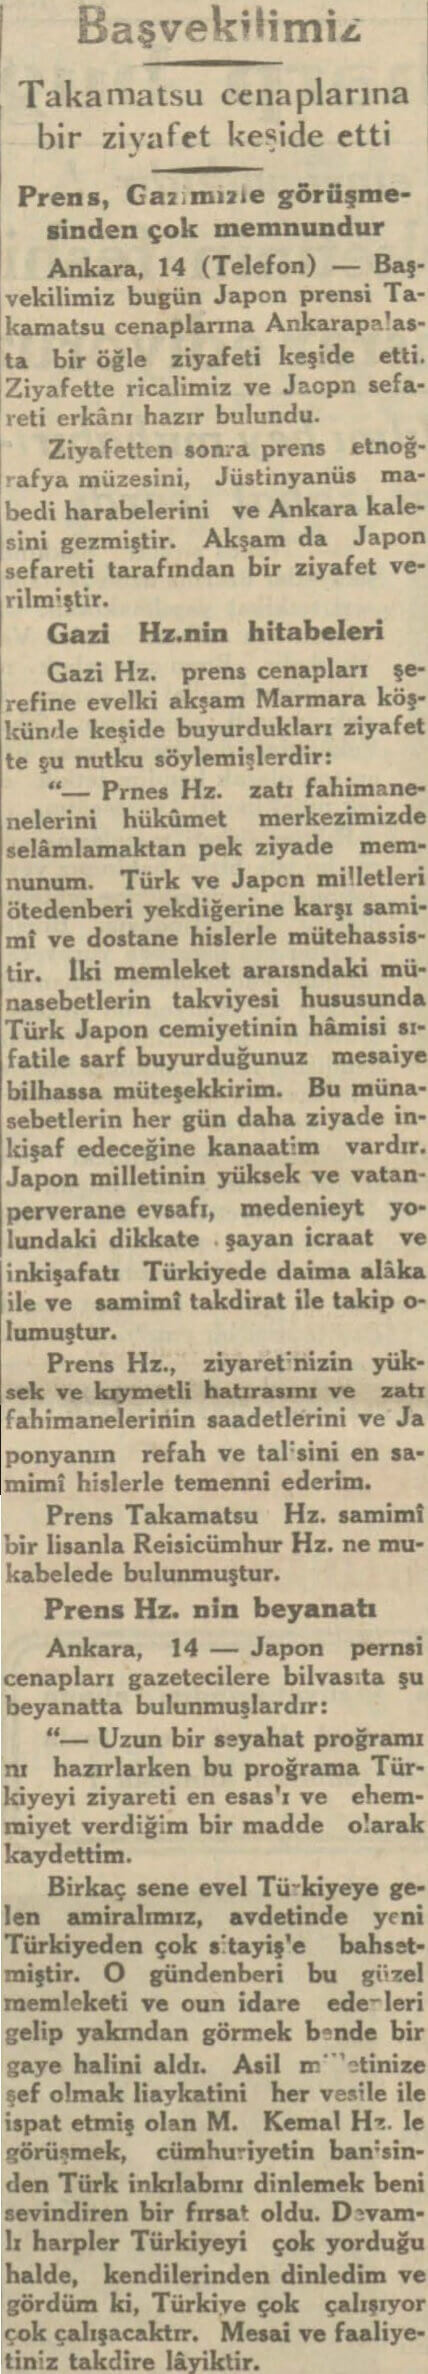 Atatürk japon prensi takamatsu ziyareti